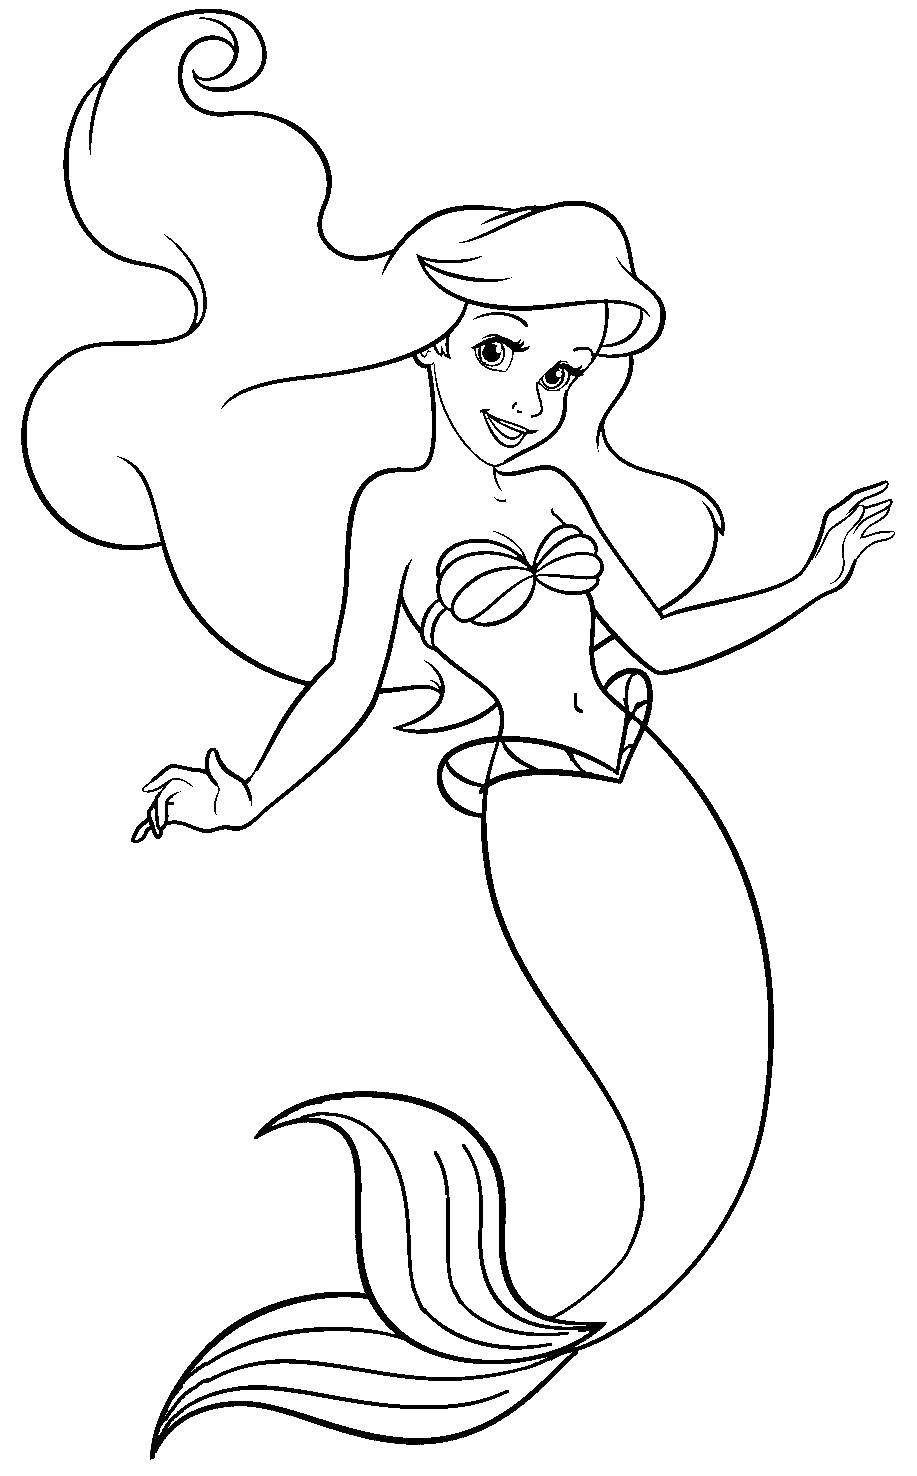 Coloring Rapunzel mermaid. Category Cartoon character. Tags:  Rapunzel .